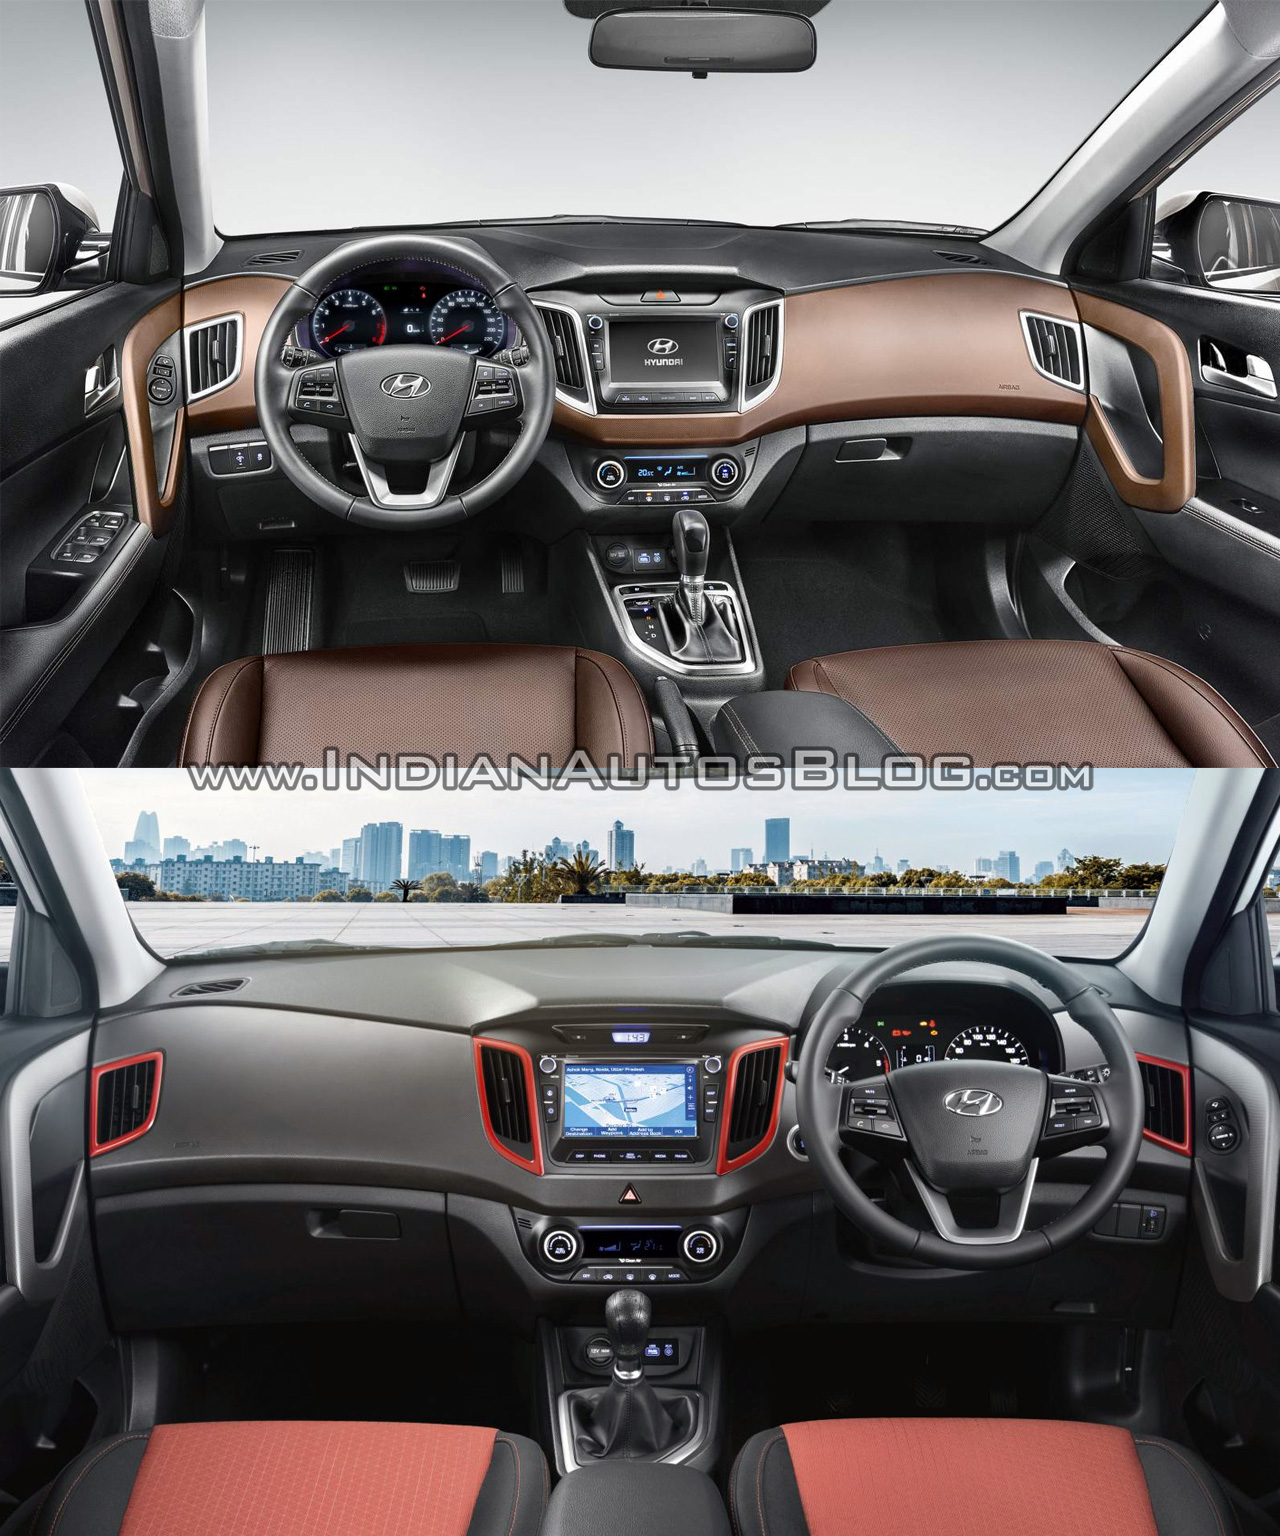 2017 Hyundai Creta vs. 2015 Hyundai Creta interior comparo